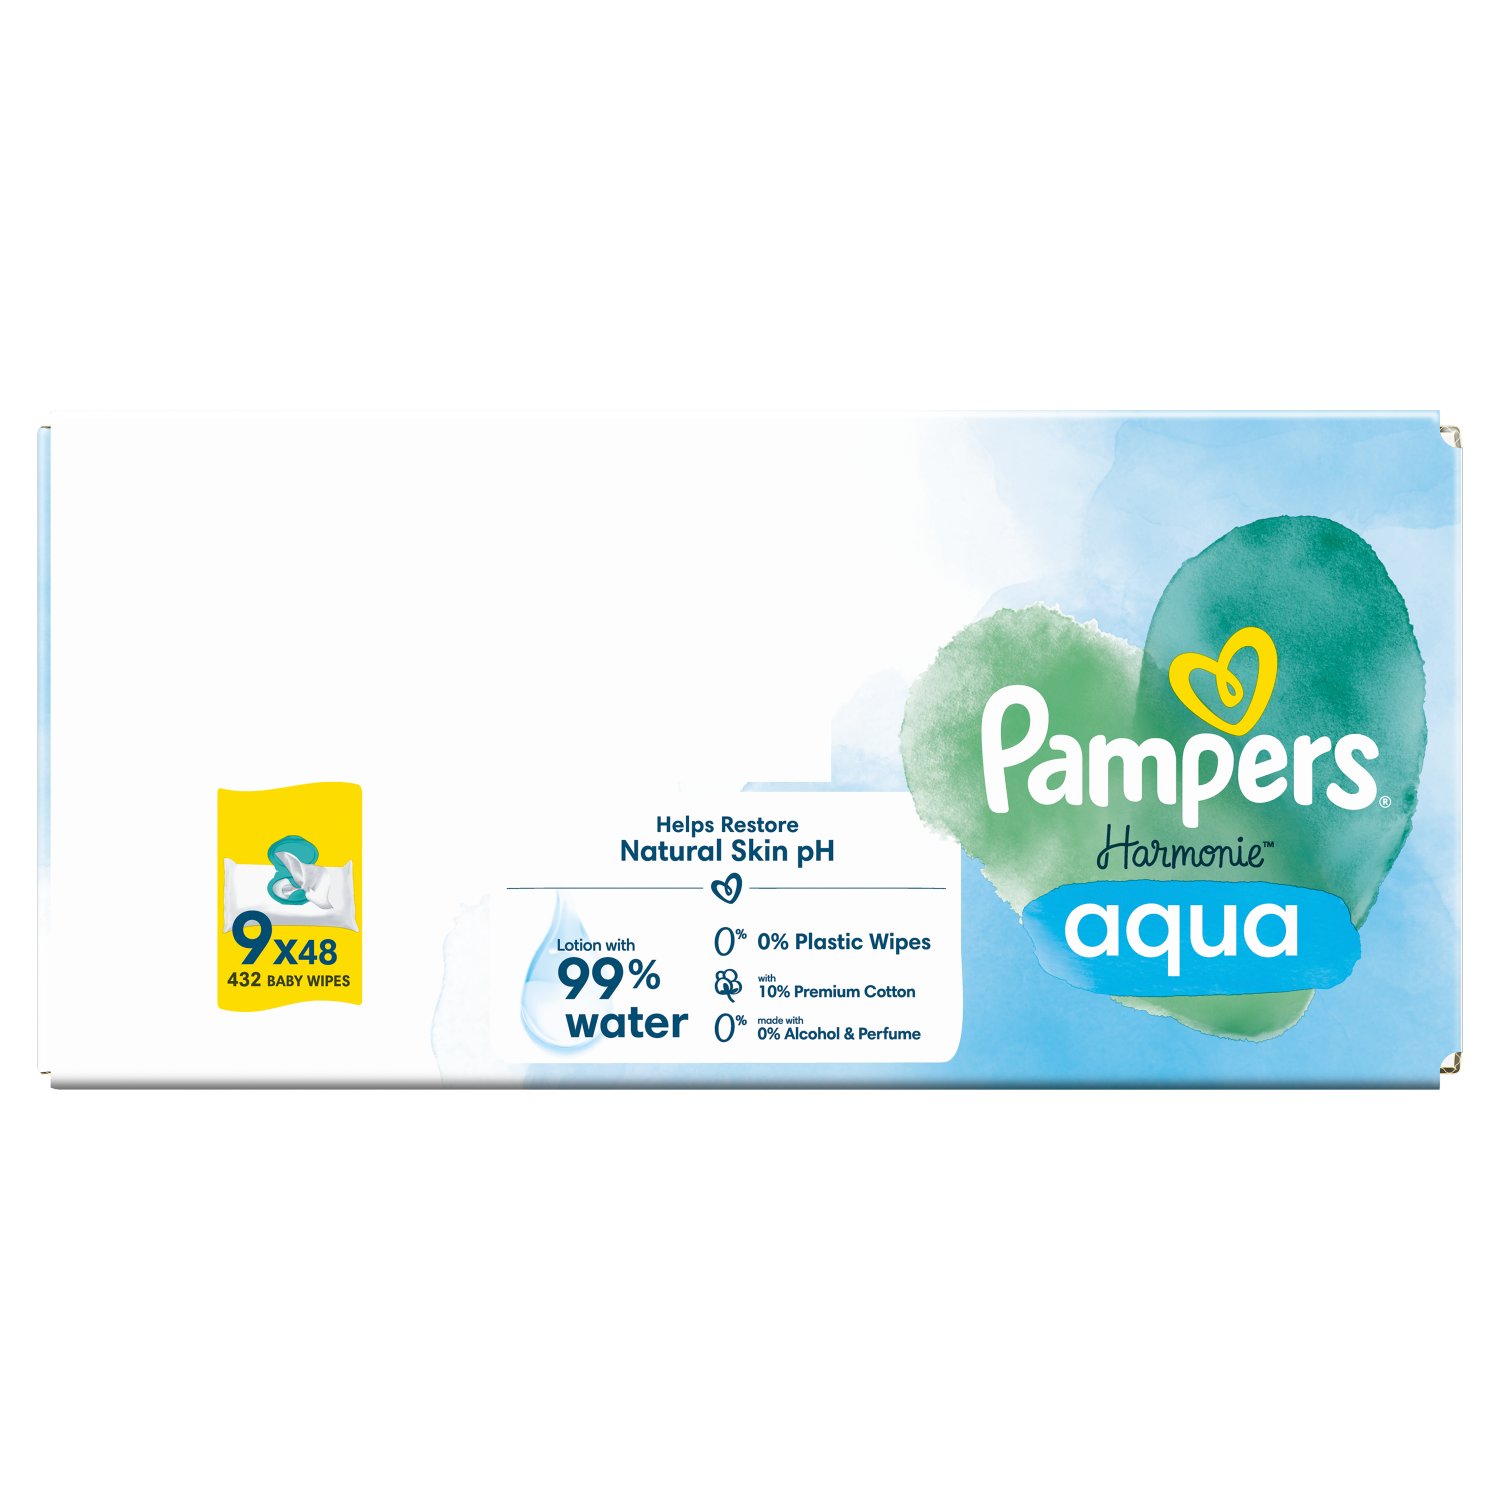 Pampers Harmonie Aqua Plastic Free Baby Wipes 9 Pack (48 Piece)